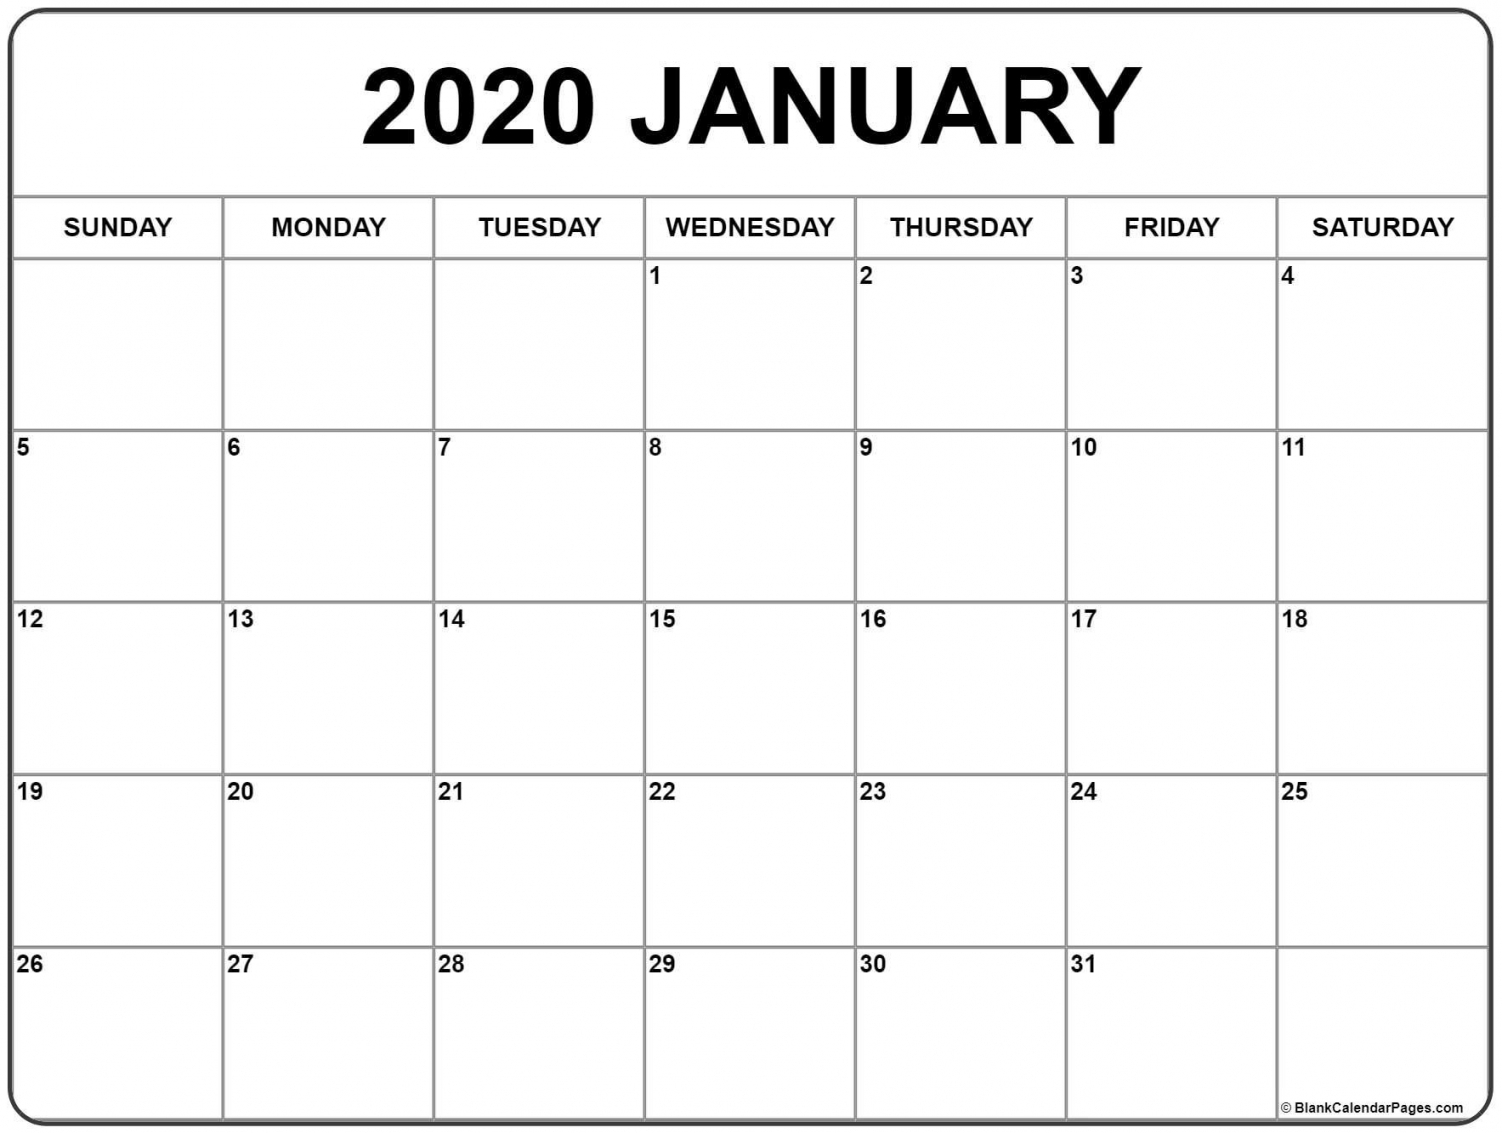 Free Printable Calendars For 2020